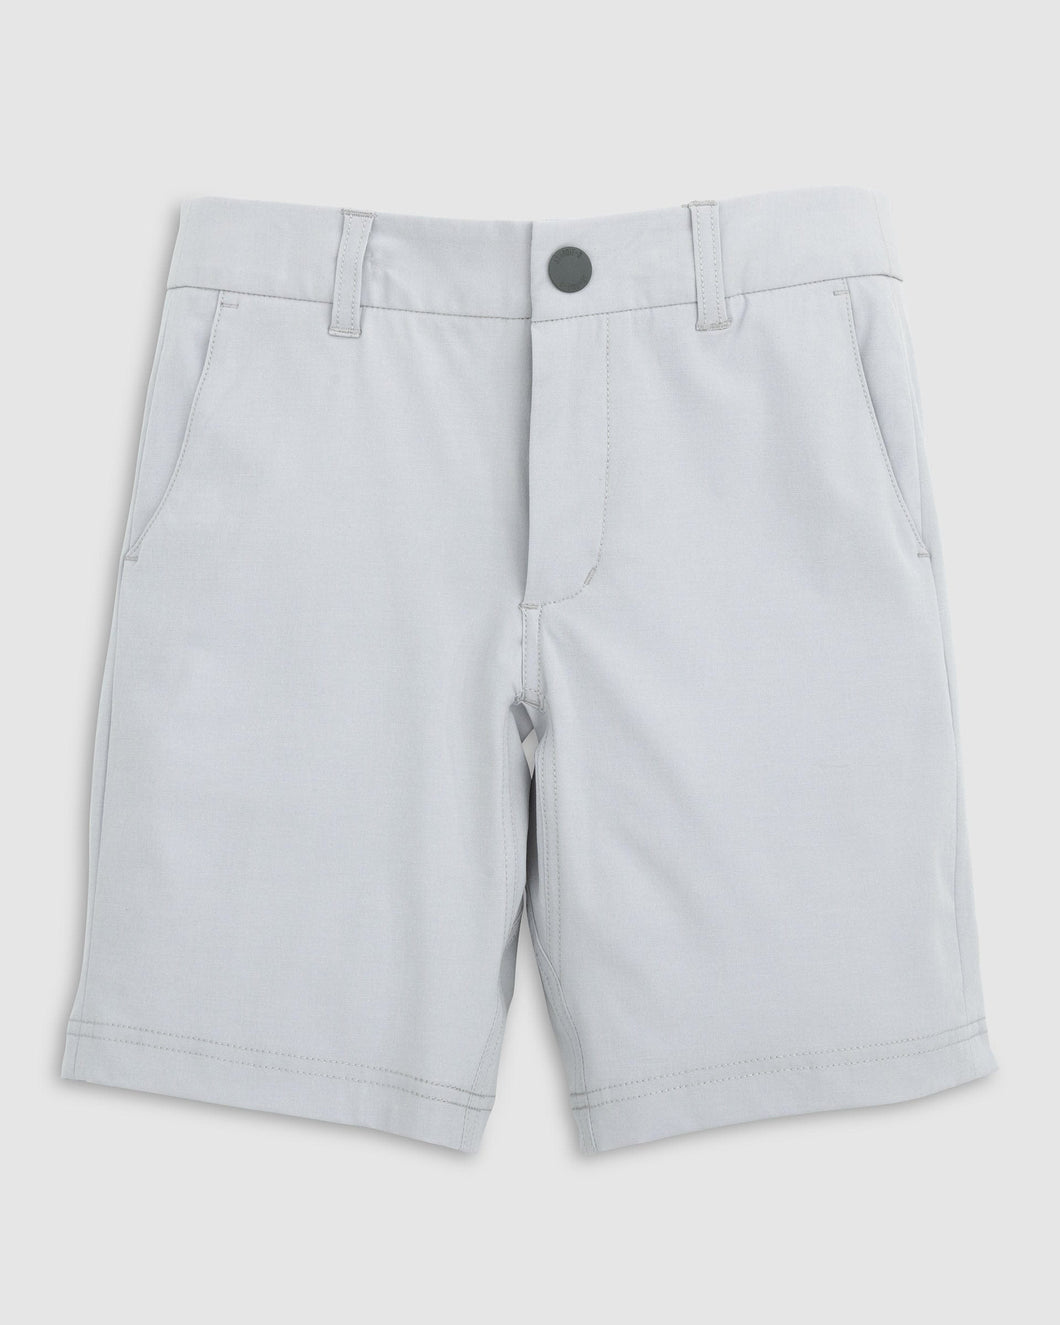 Calcutta Shorts Chrome Shorts